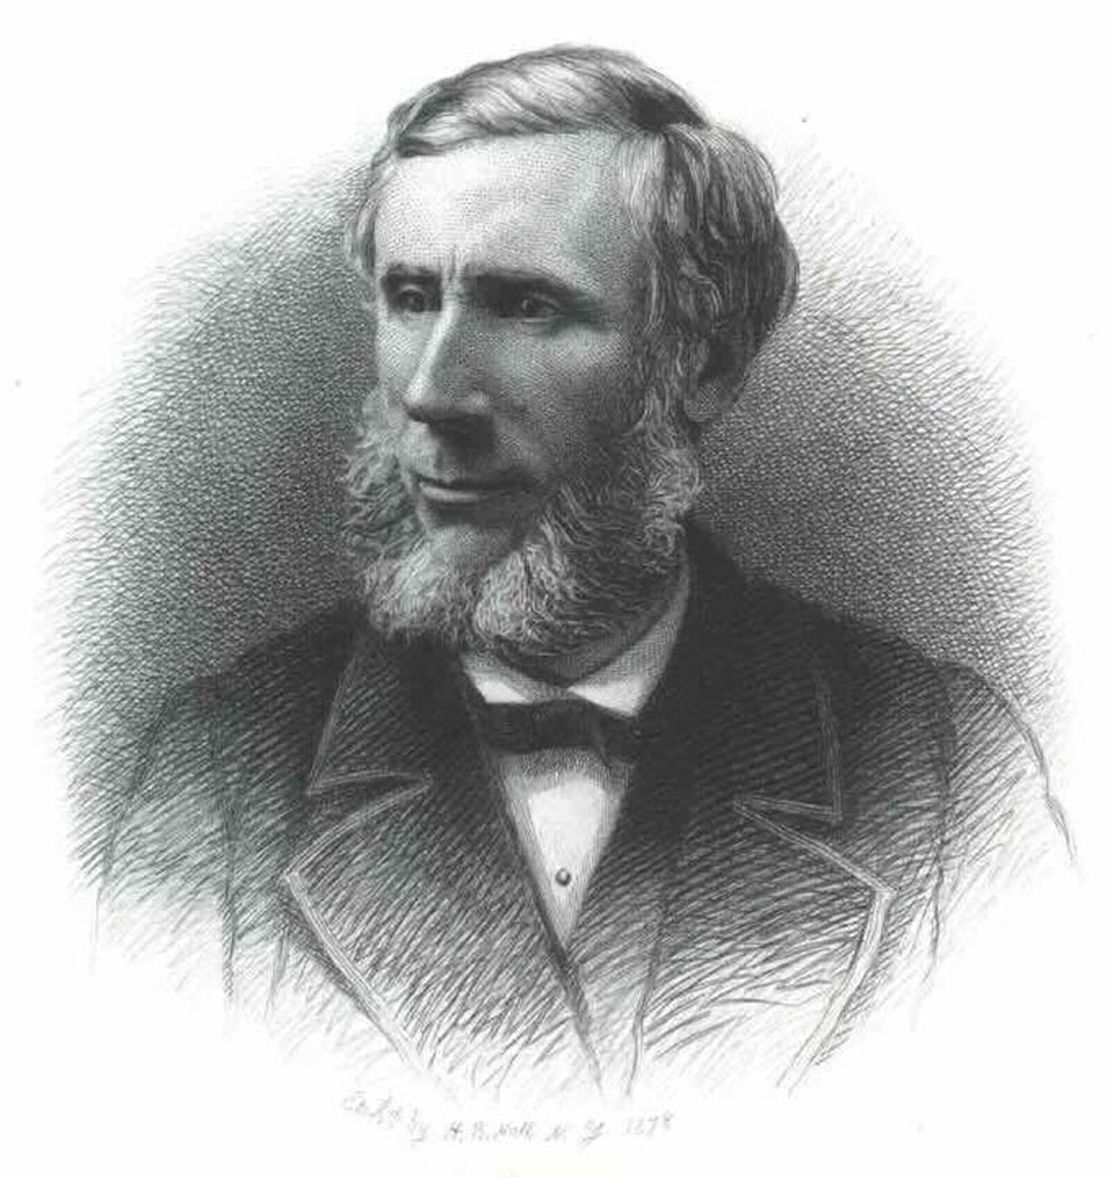 John Tyndall, born